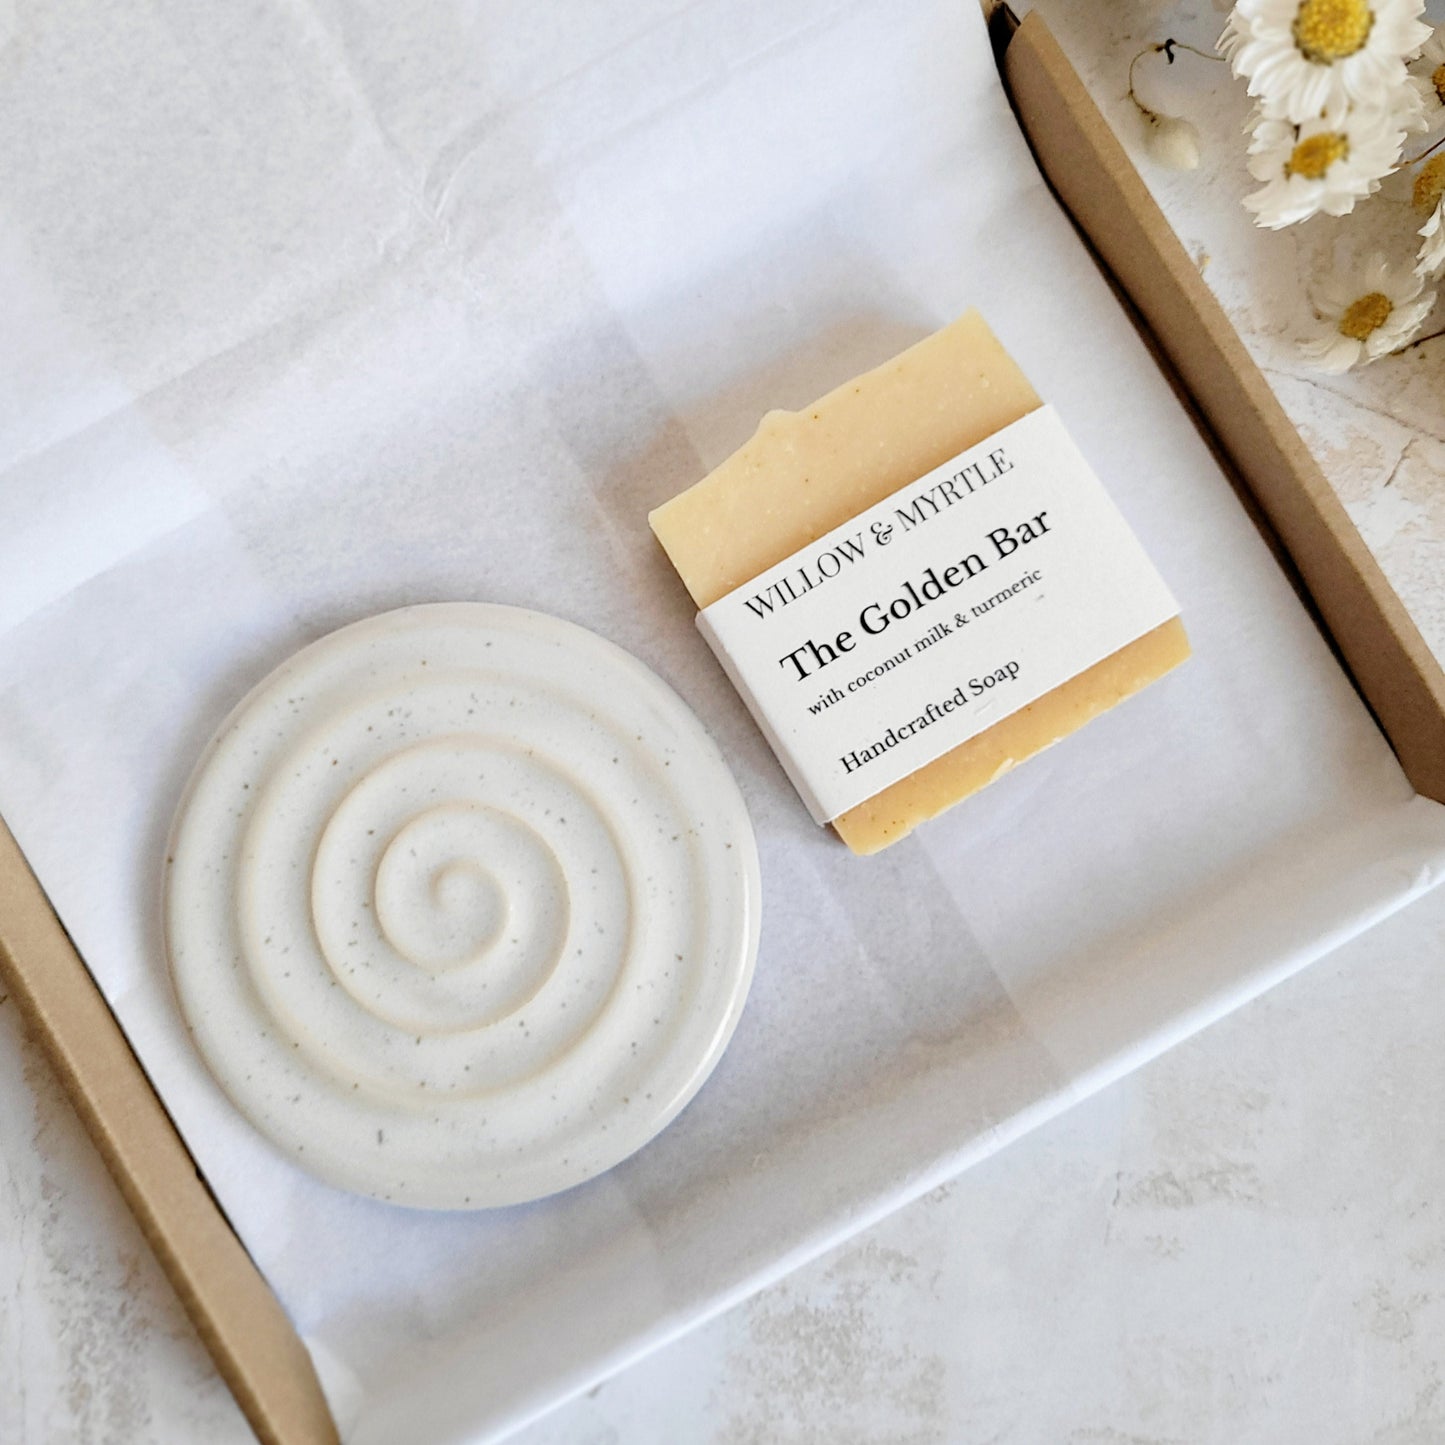 Soap gift set - handmade natural soap bar and round ceramic soap dish, natural soap gift box, vegan soap, vegan gift